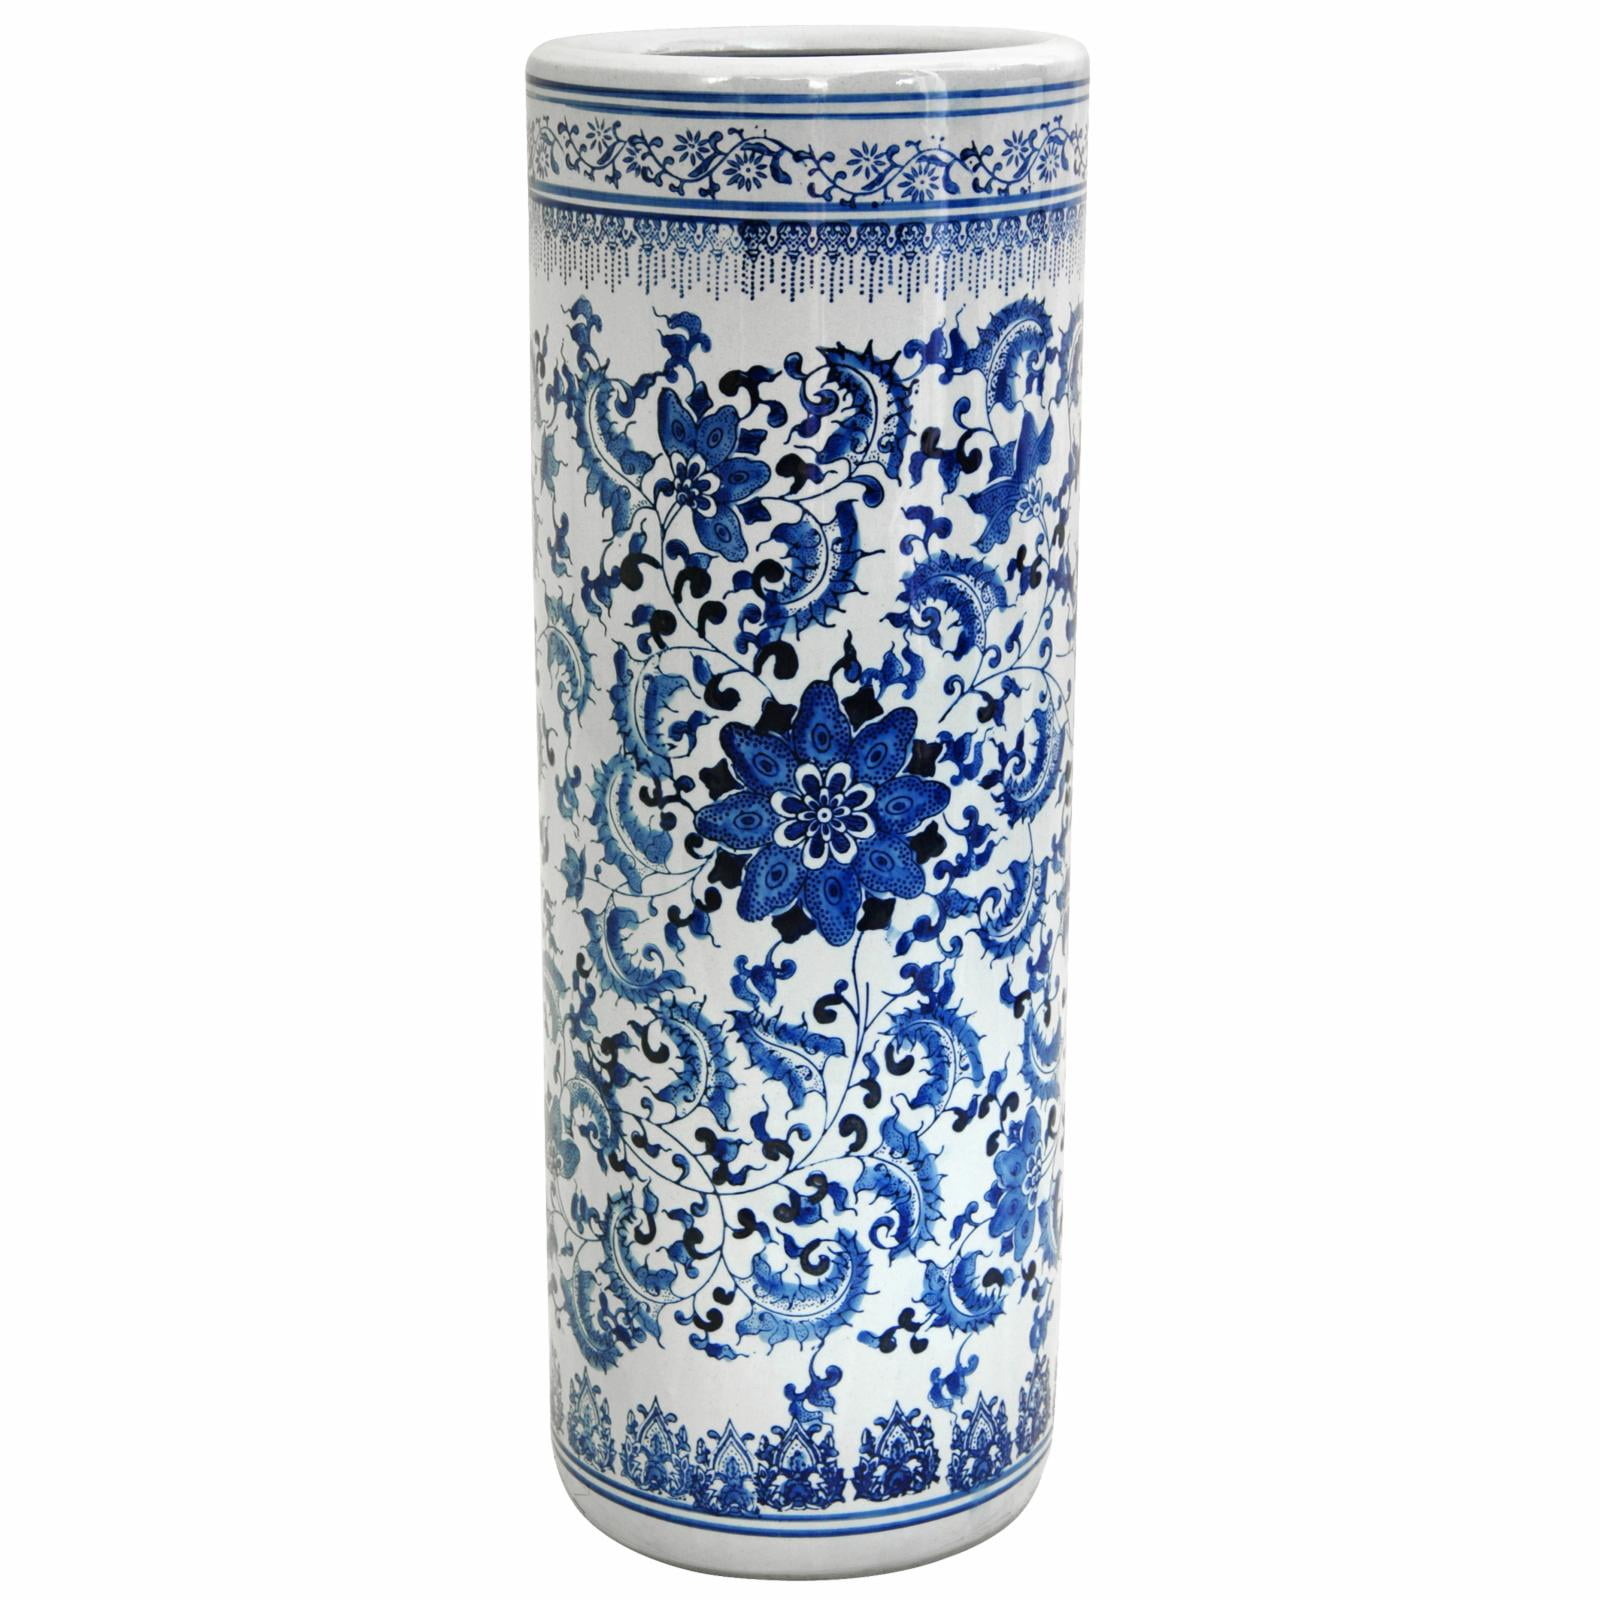 Umbrella Stand Stick Holder Round Blue & White Flowers 18" Tall Ceramic Storage 